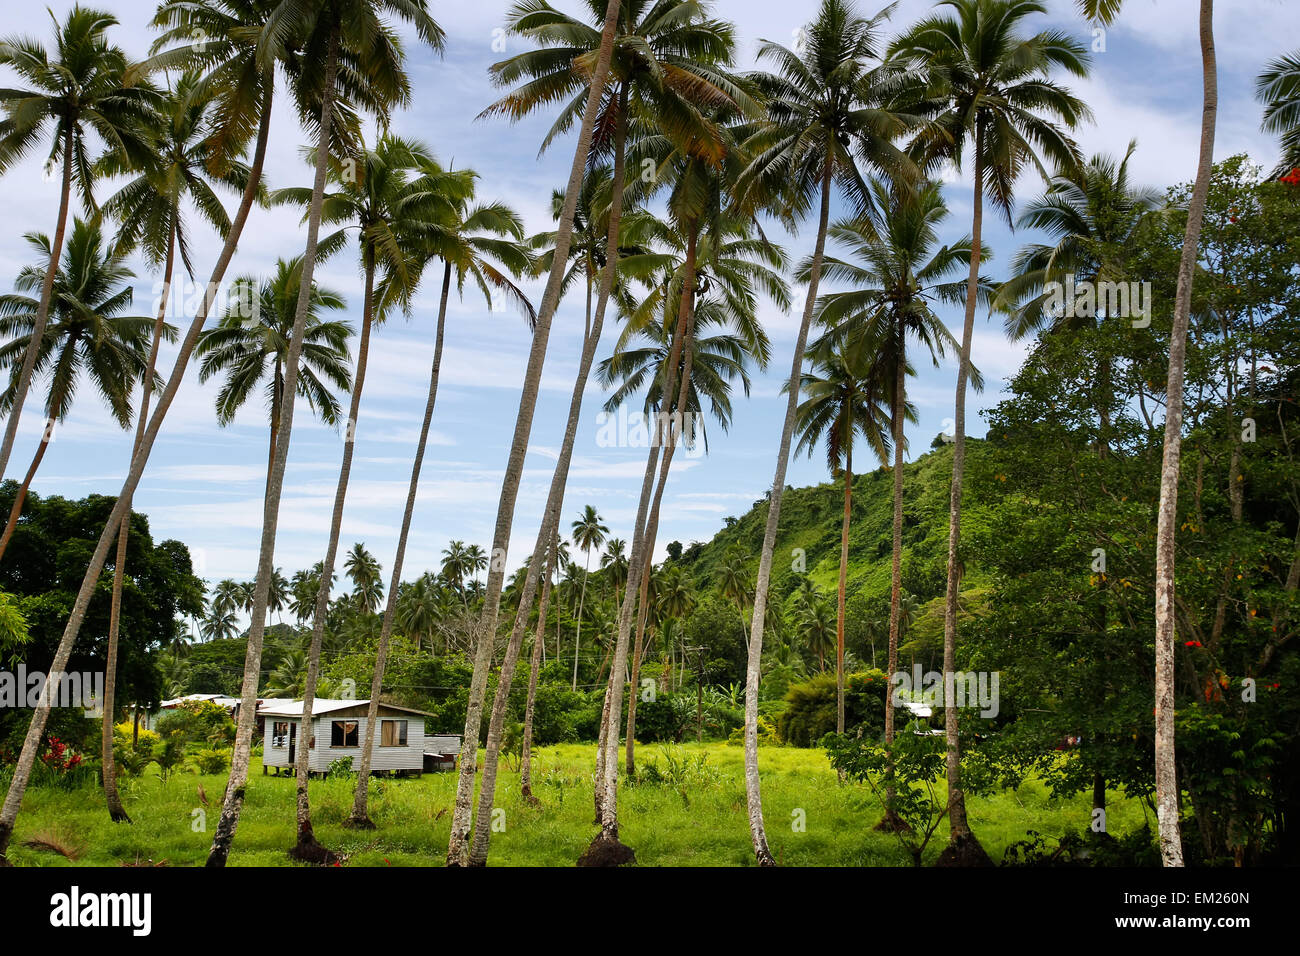 Local house in palm grove, Vanua Levu island, Fiji, South Pacific Stock Photo